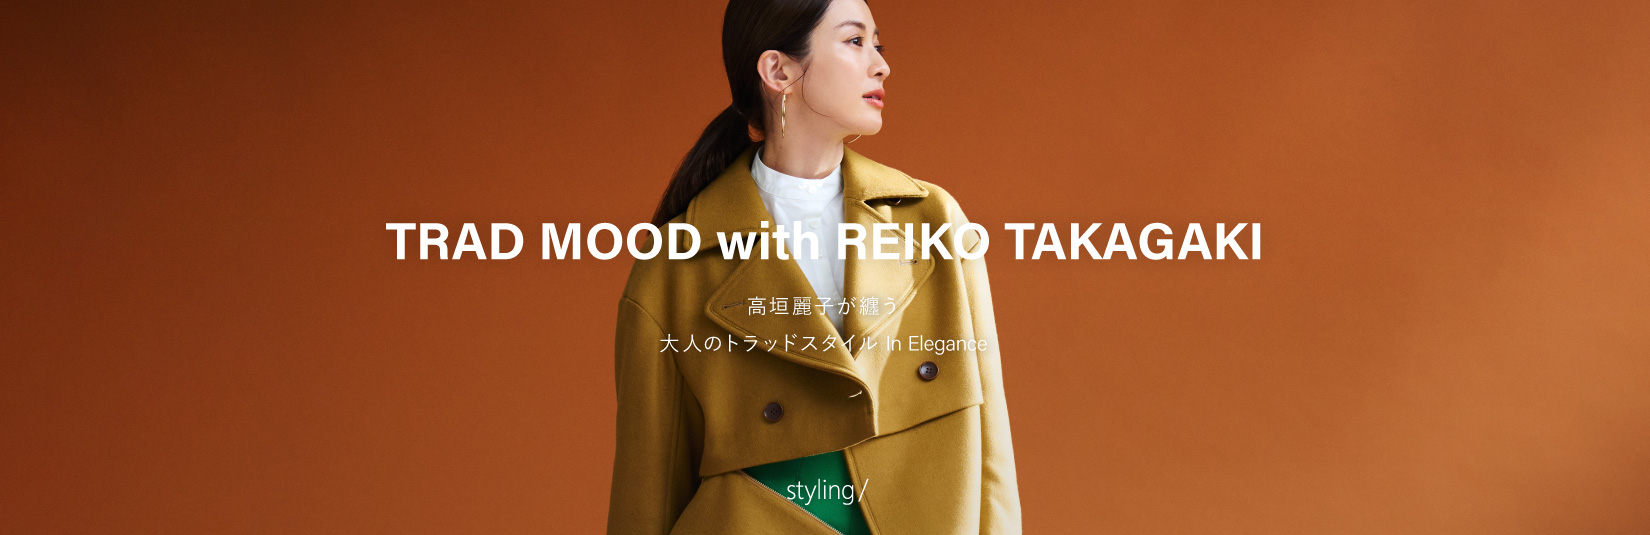 styling/ TRAD MOOD with REIKO TAKAGAKI